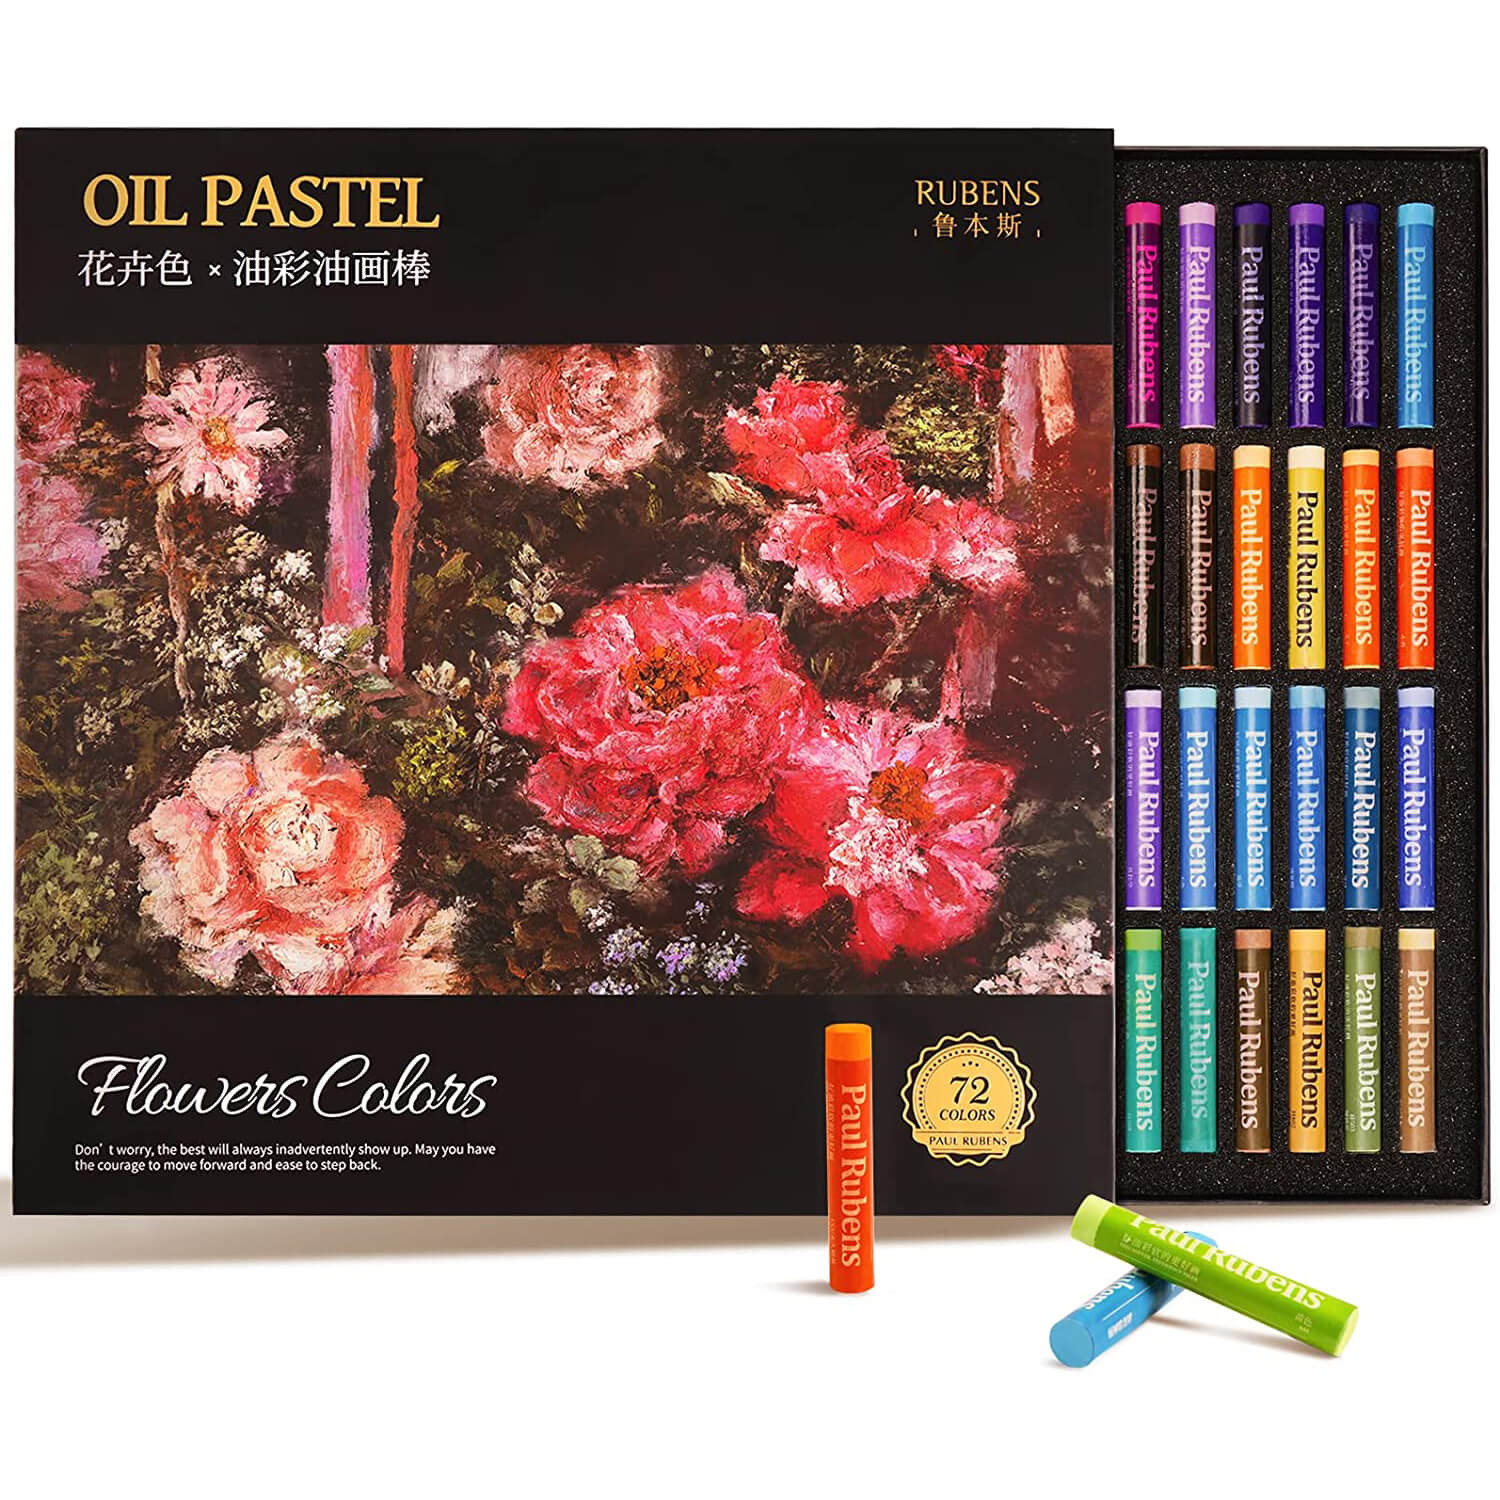 Paul Rubens 72 Blumenfarben Künstler-Ölpastell-Set 